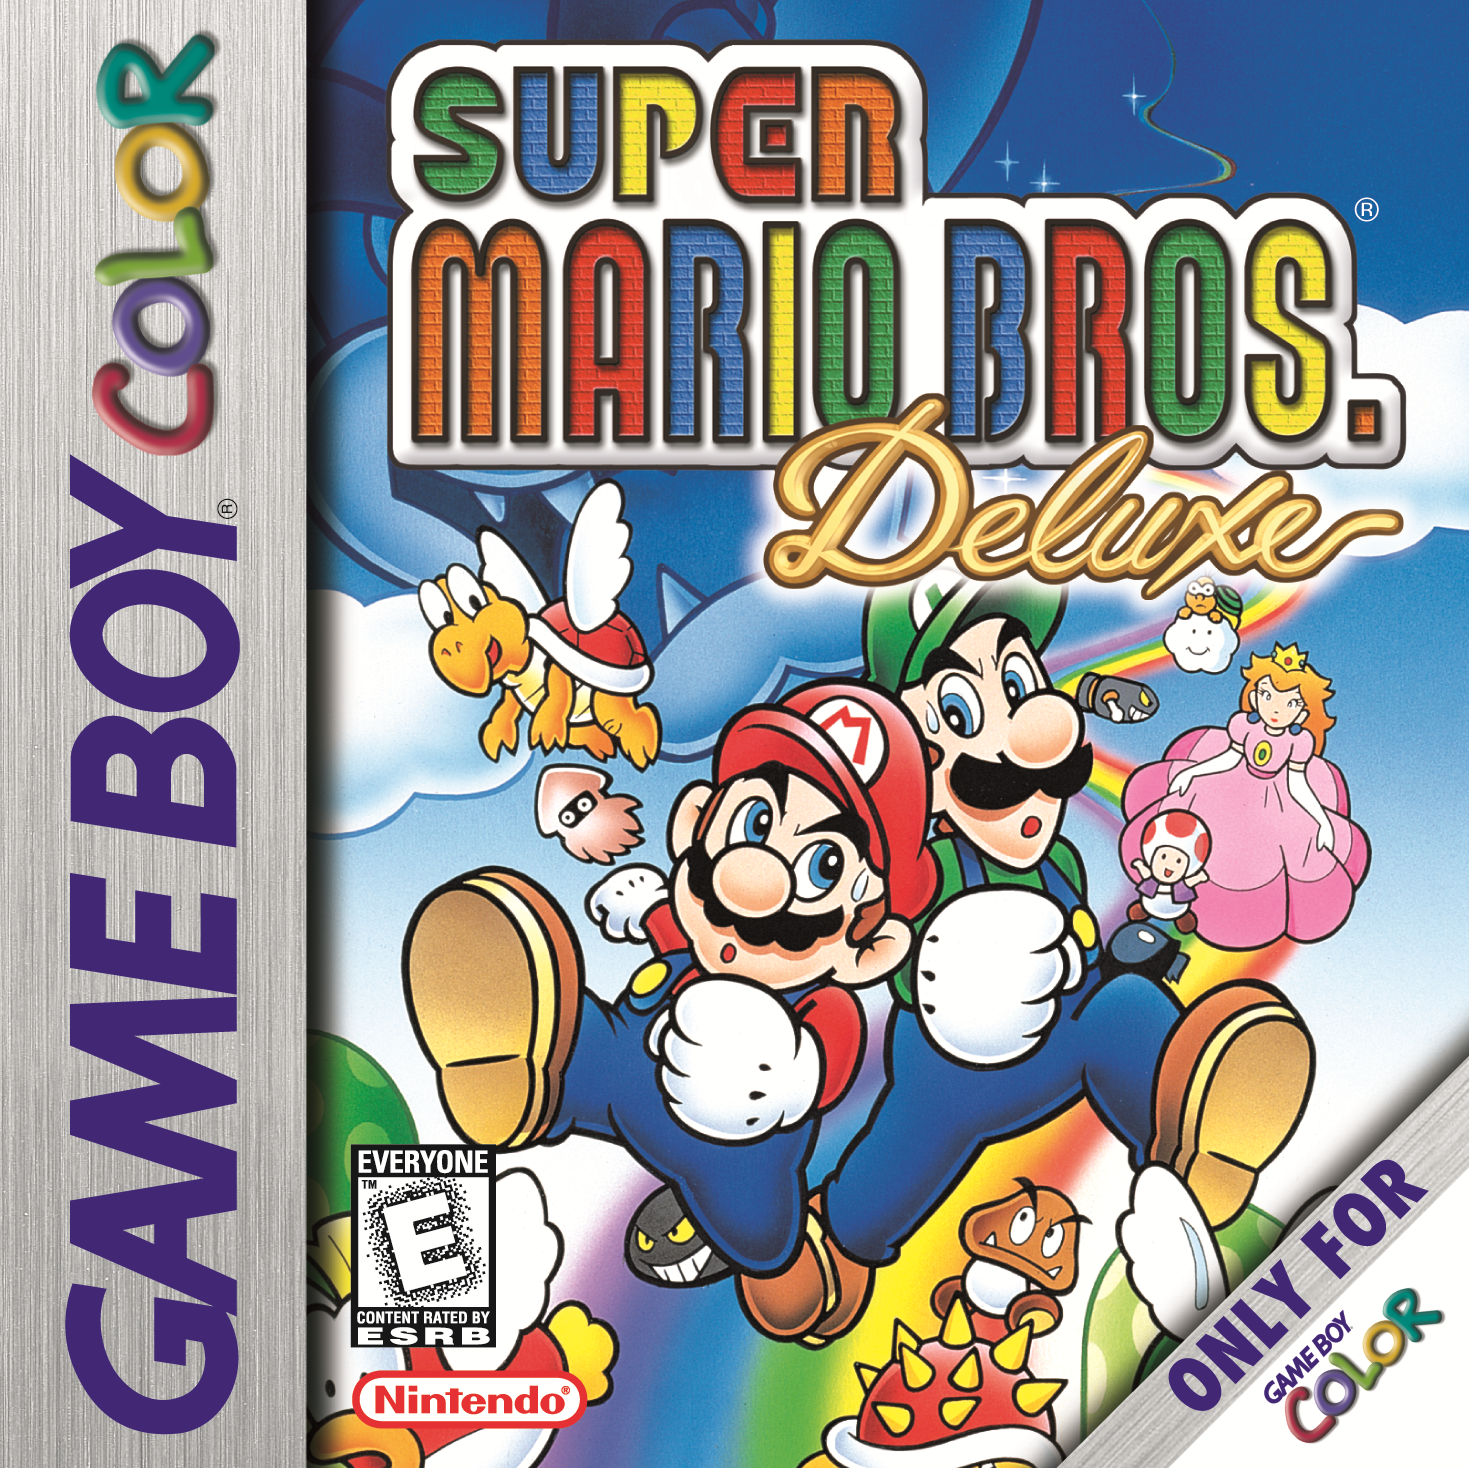 Game Boy Color NA - Super Mario Bros. Deluxe.png